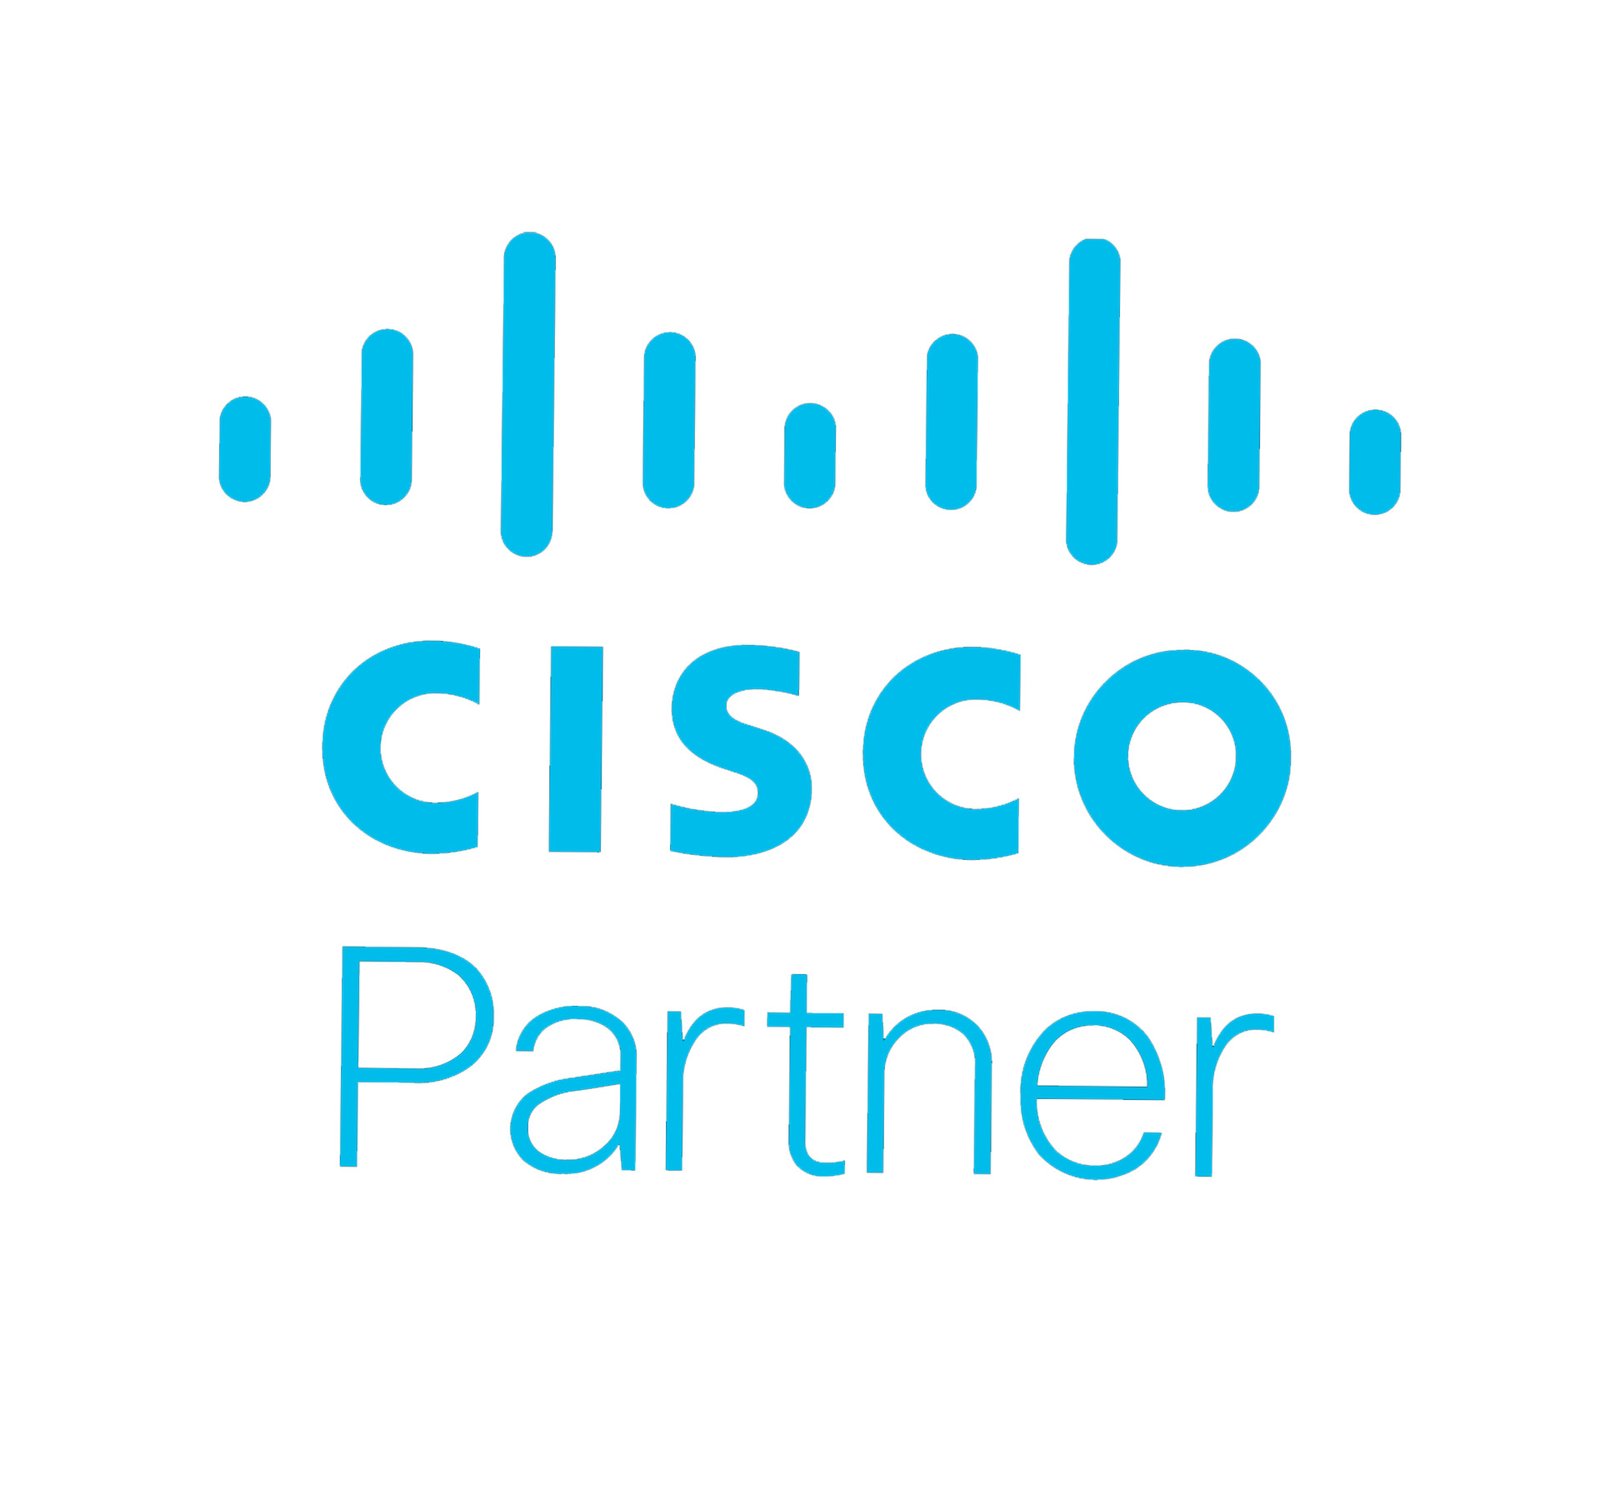 cisco partner logo whitebg